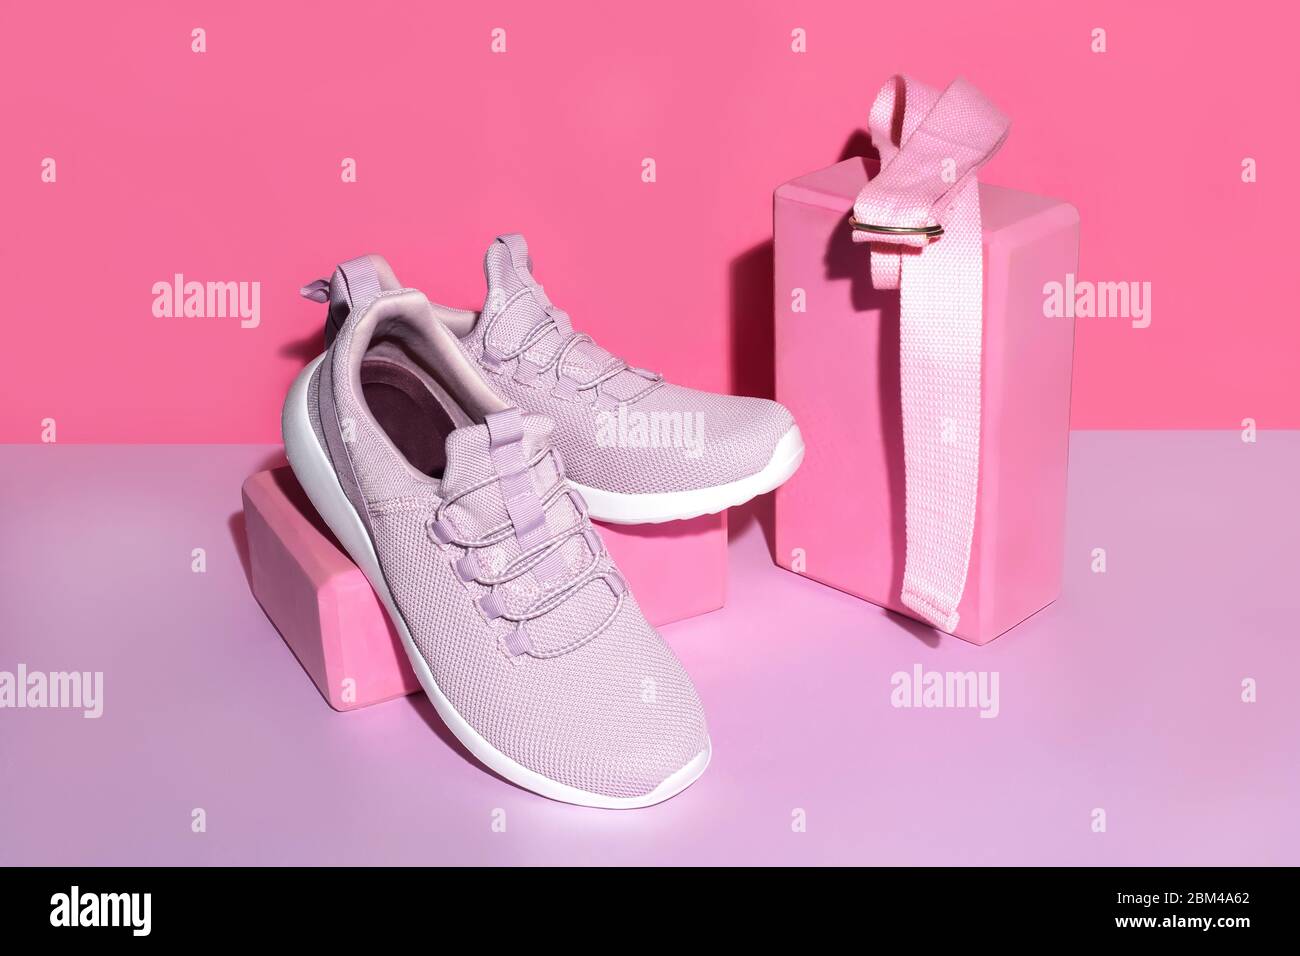 Adidas Baseline Women's Leather Sneakers | Adidas shoes women, Leather  sneakers women, Pink sneakers